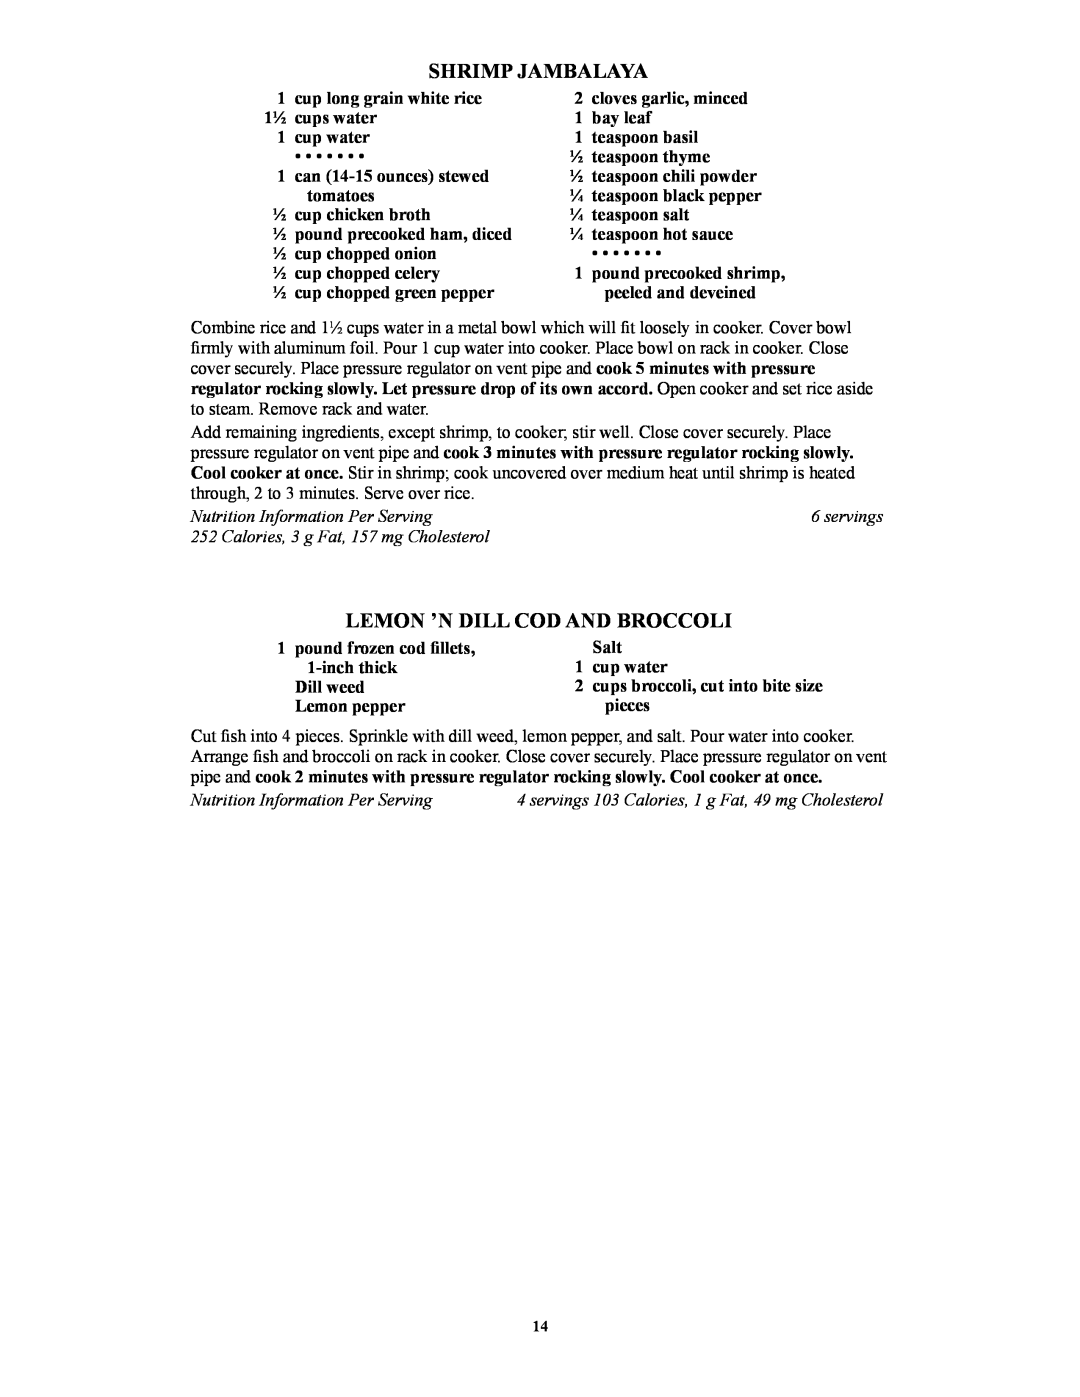 Presto 1341, 1282, 1241, 1362, 1264 manual Shrimp Jambalaya, Lemon ’N Dill Cod And Broccoli, Nutrition Information Per Serving 